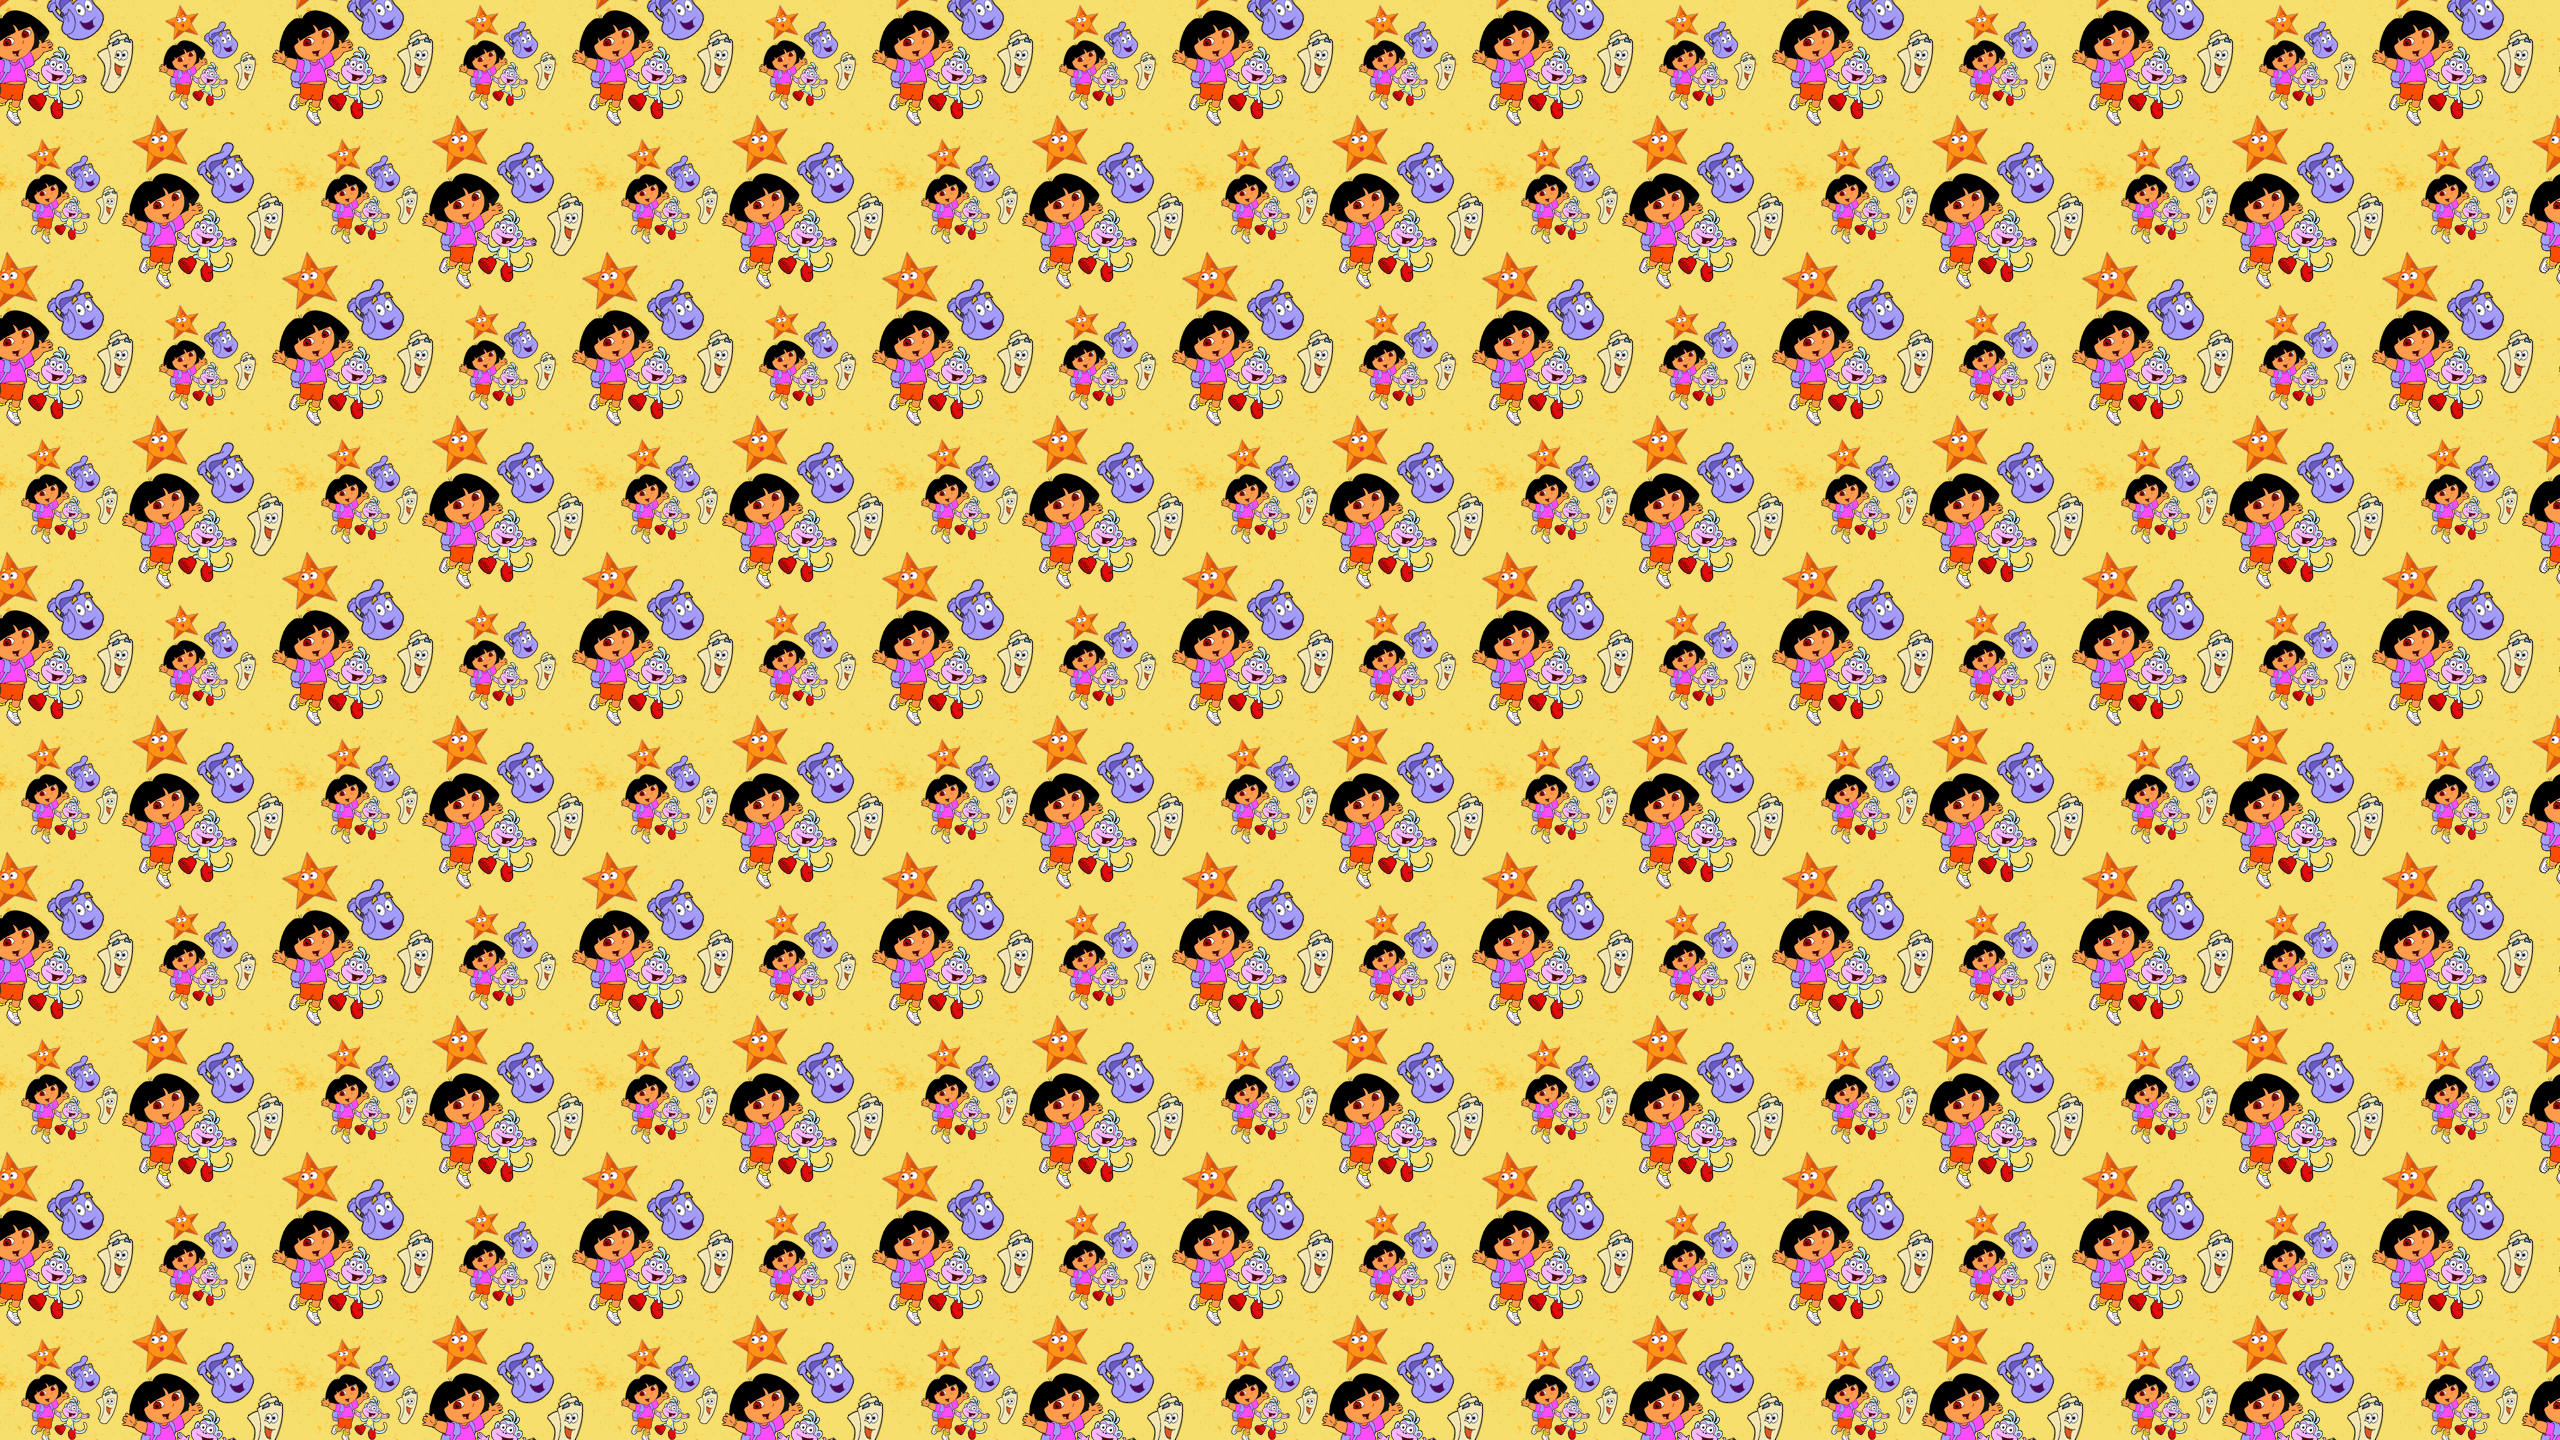 Dora The Explorer Background - HD Wallpaper 